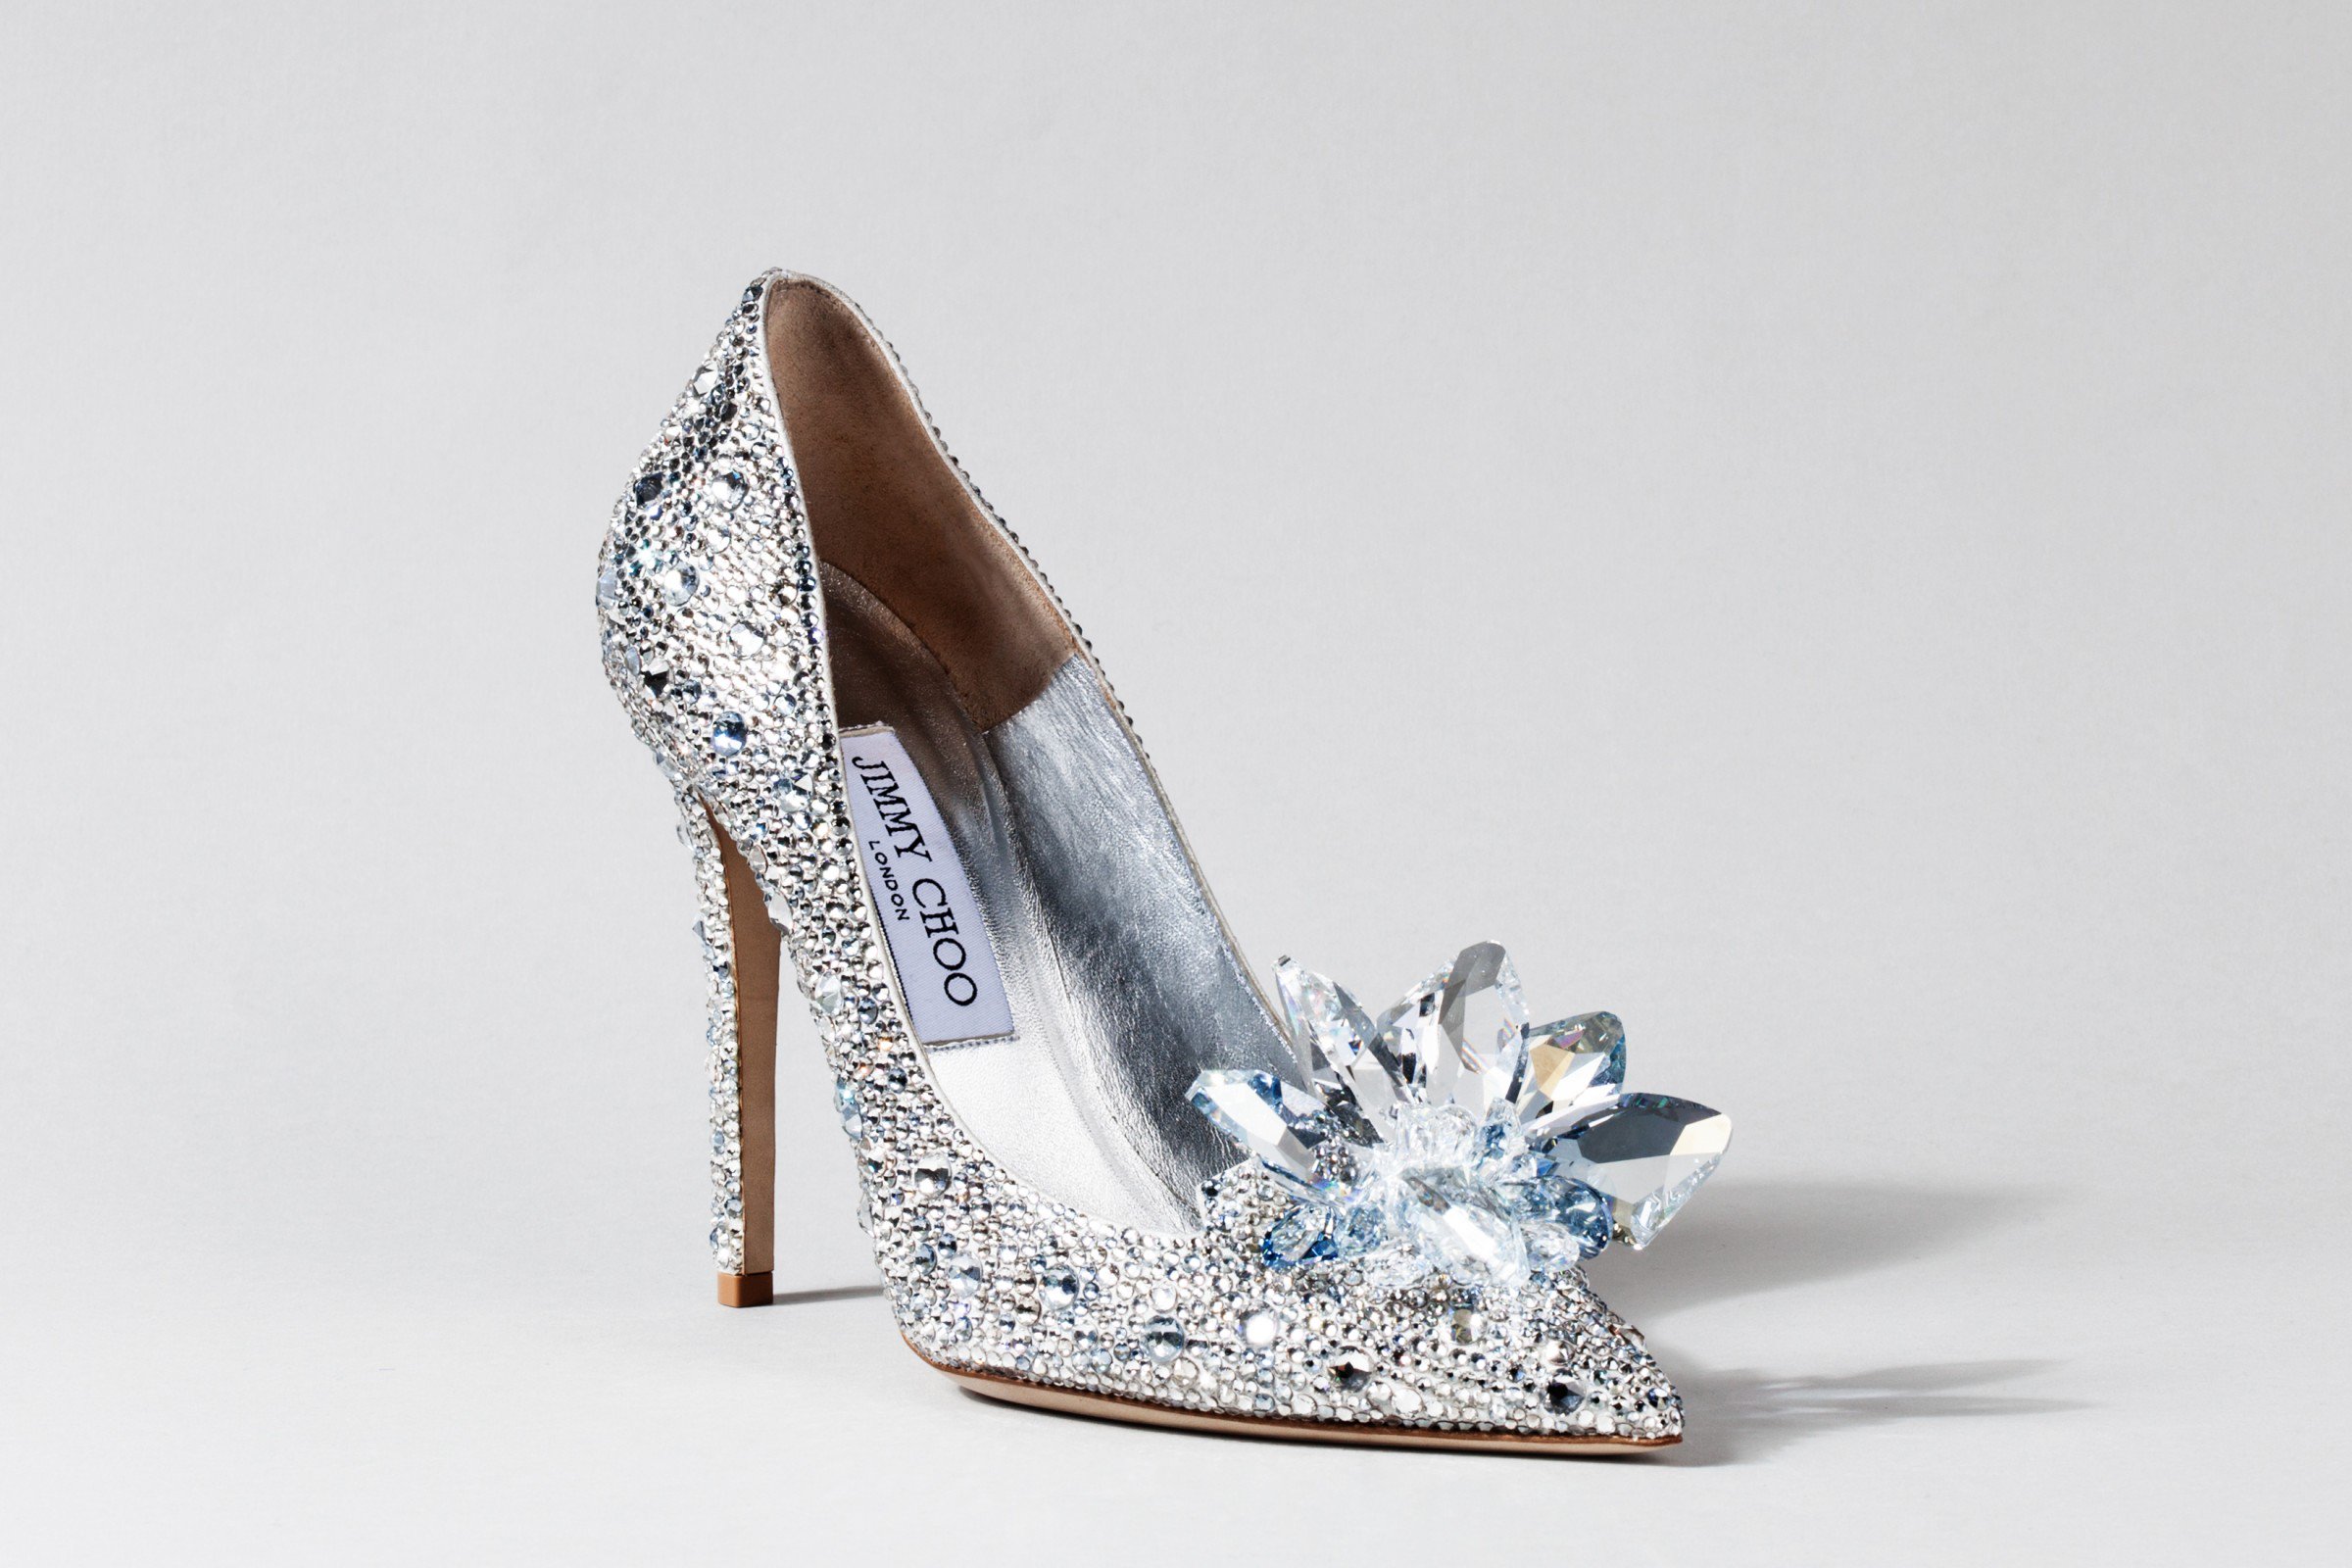 Jimmy Choo creates modern design Cinderella Shoe worthy of Fairy tale